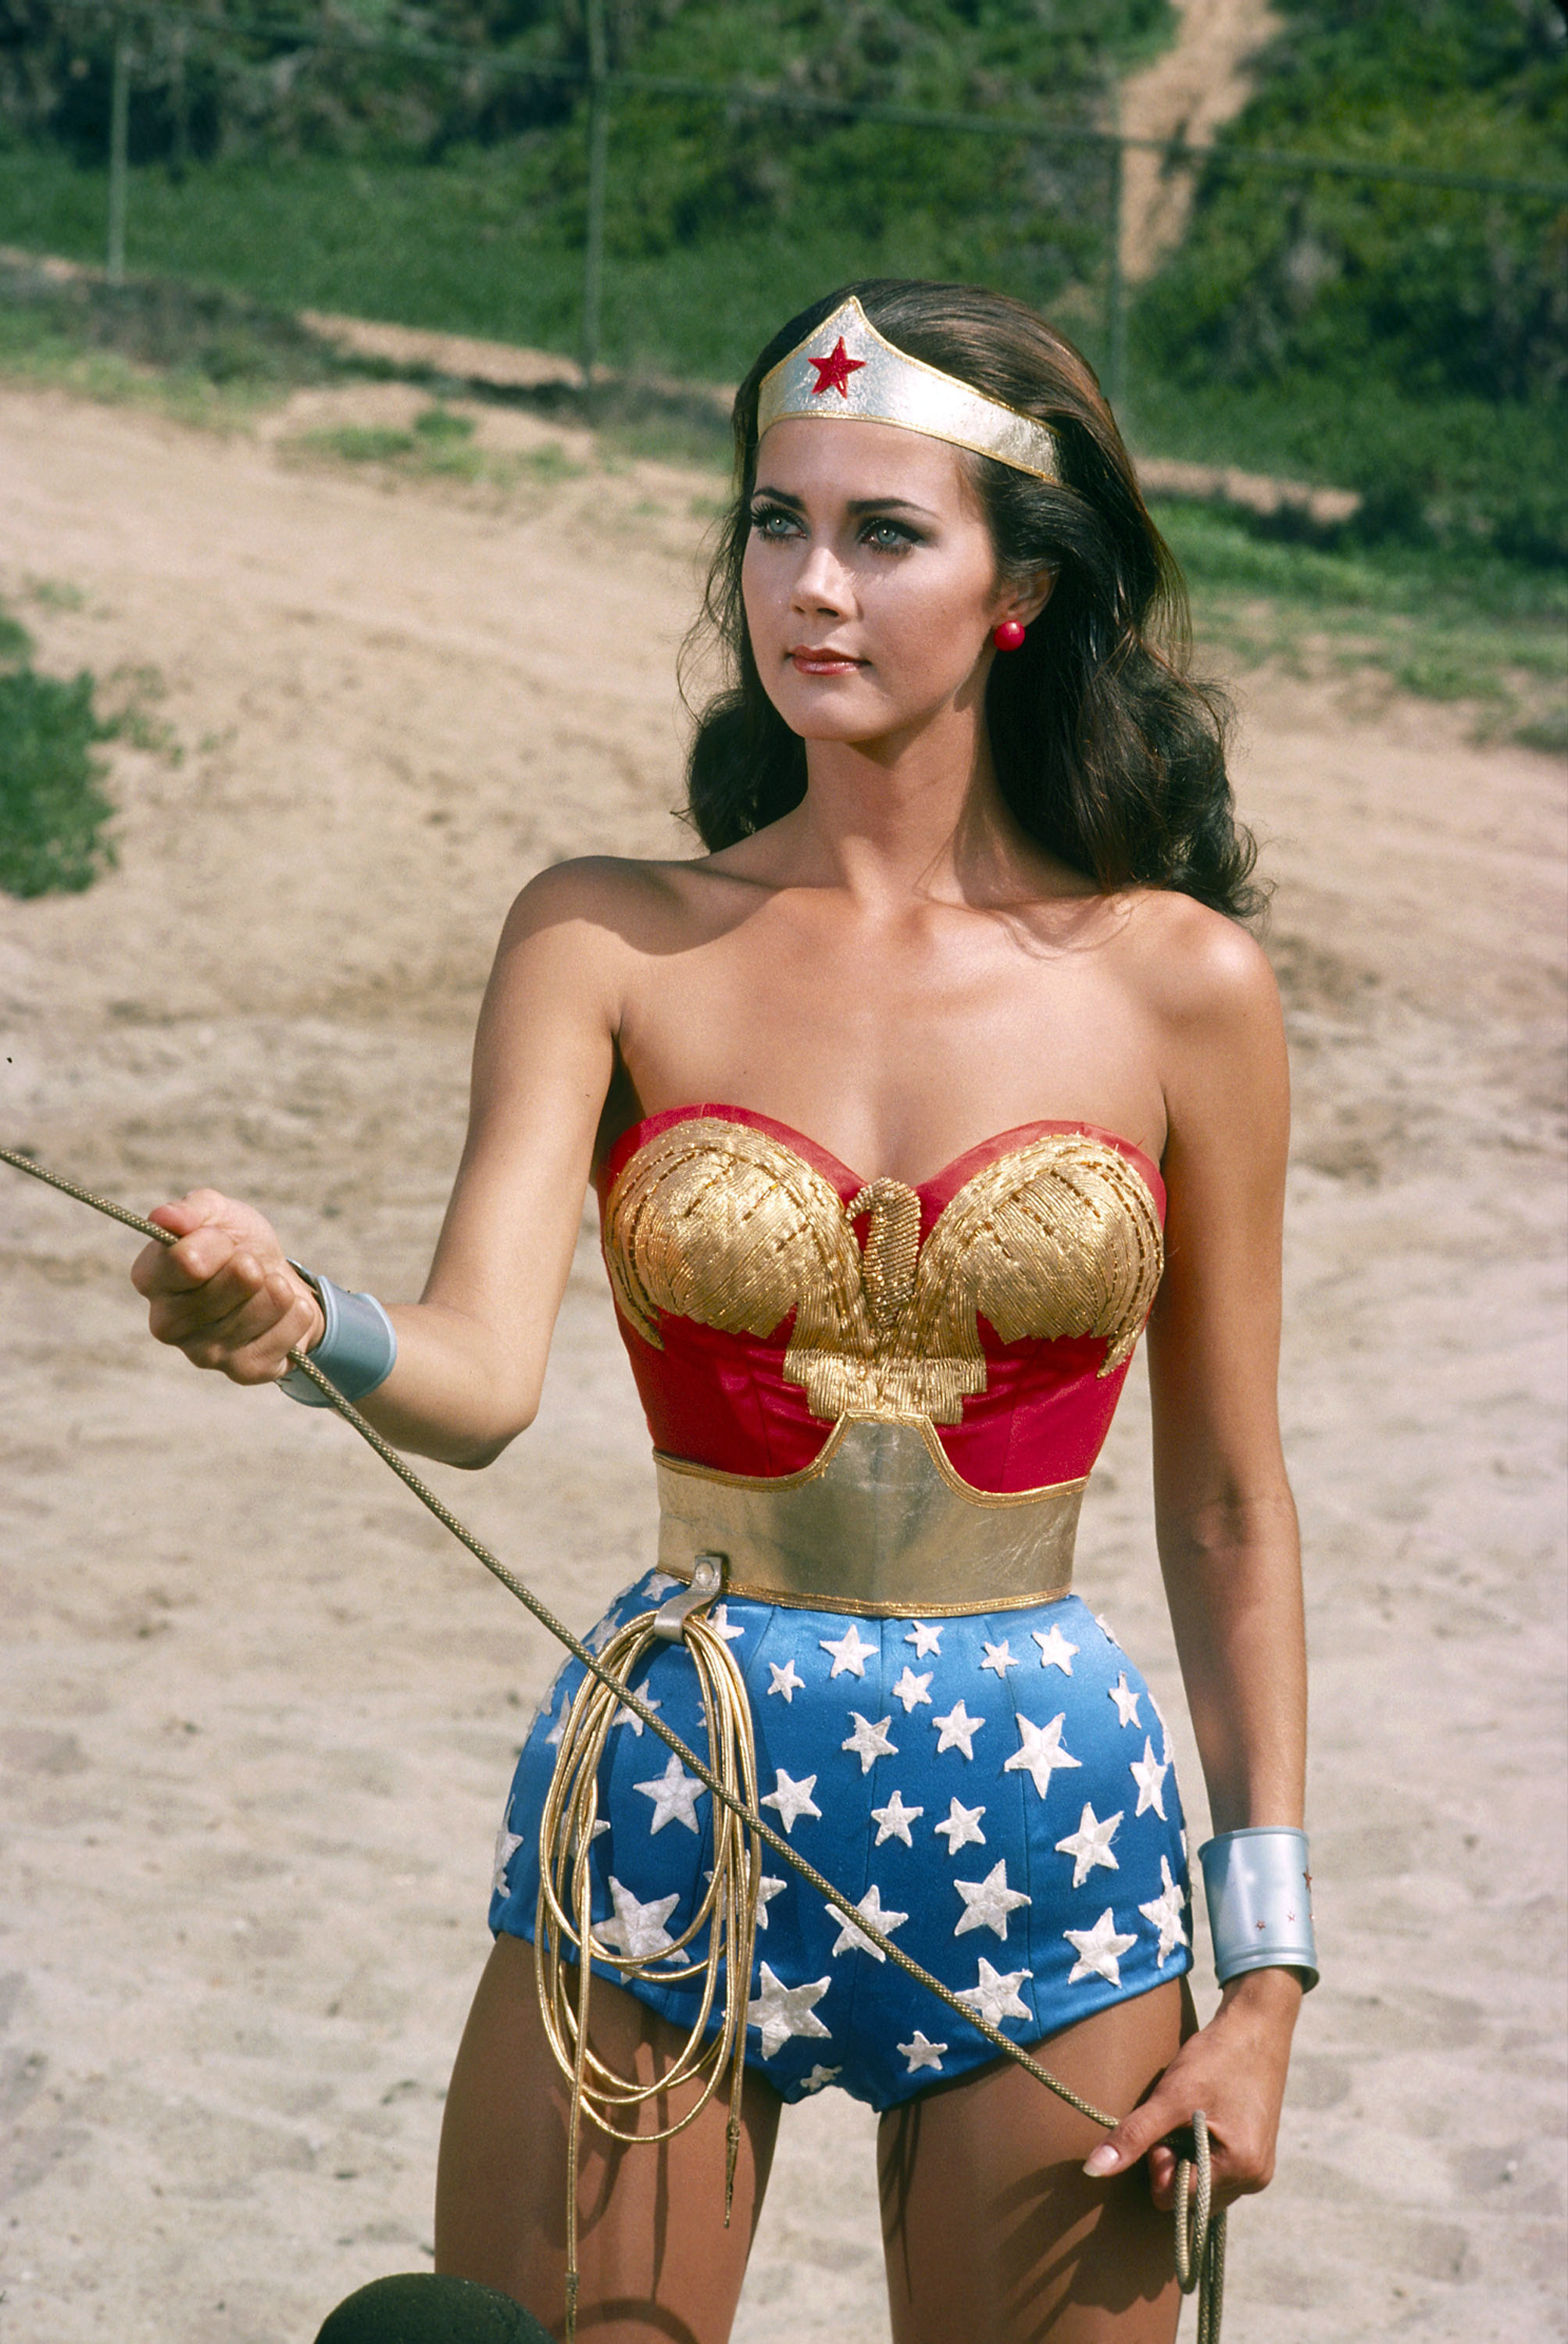 Lynda Carter dans "Wonder Woman", 1977 | Source : Getty Images